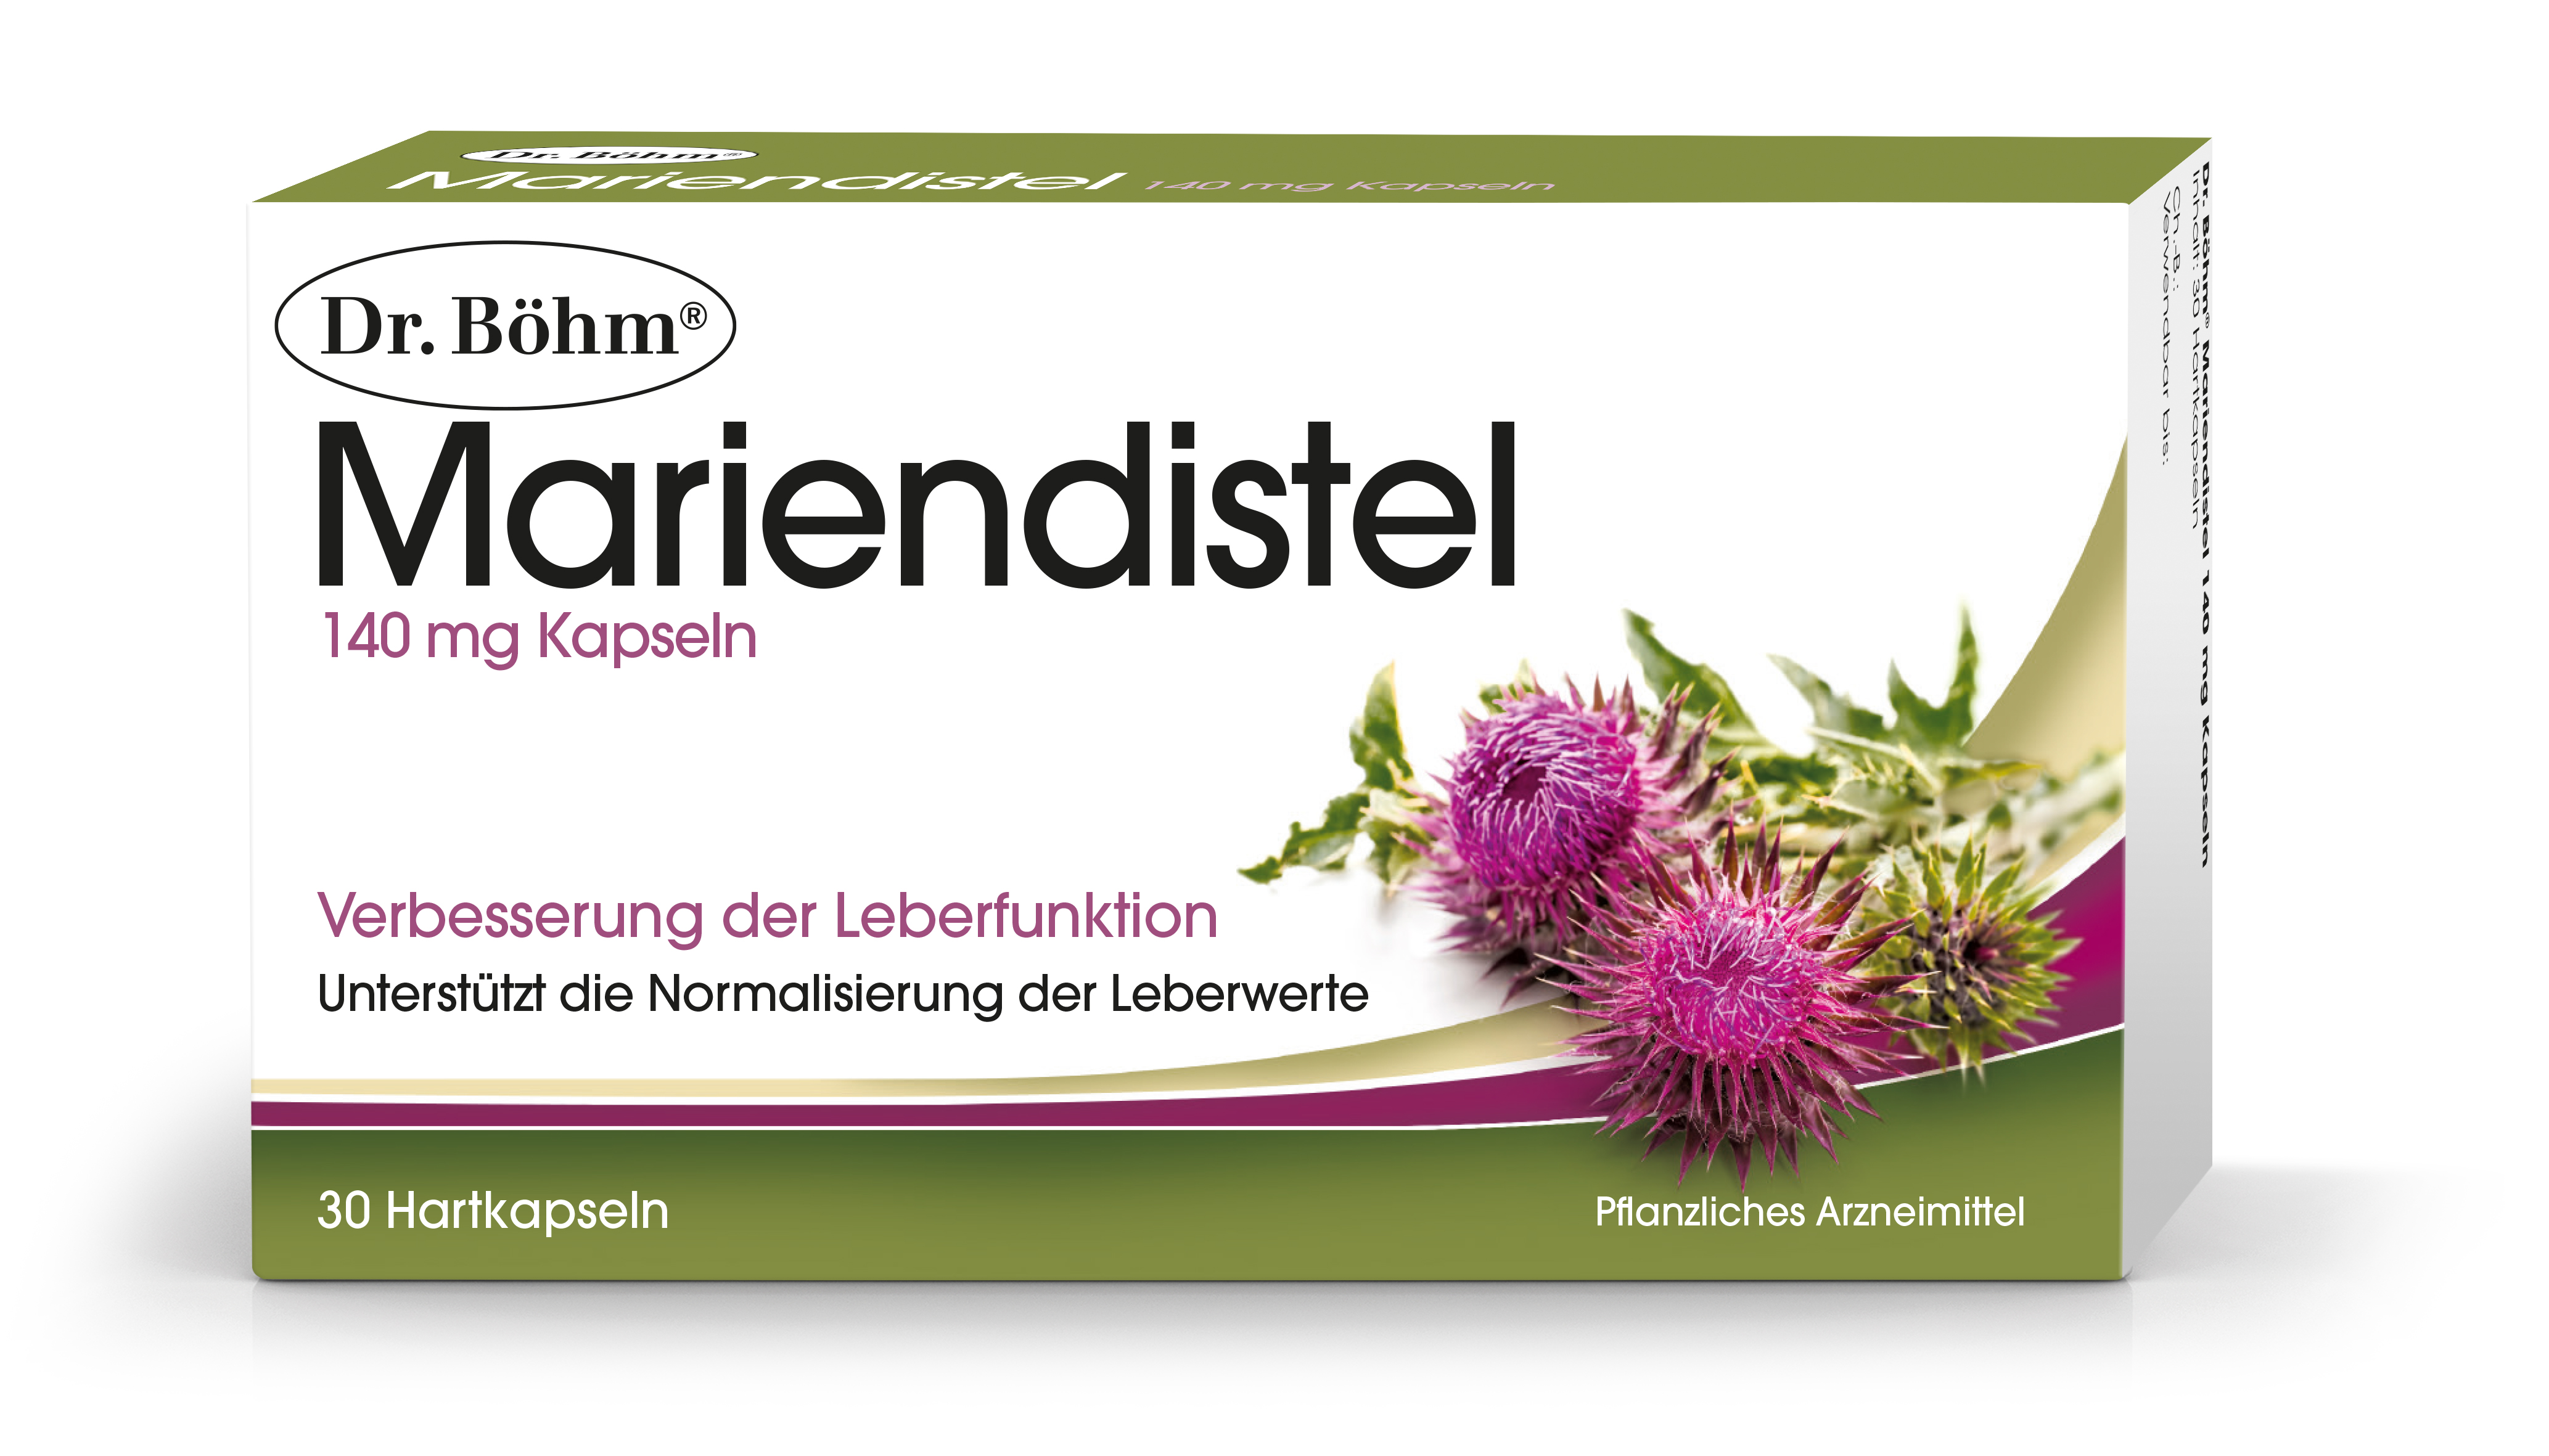 Dr. Böhm Mariendistel 140 mg - Kapseln